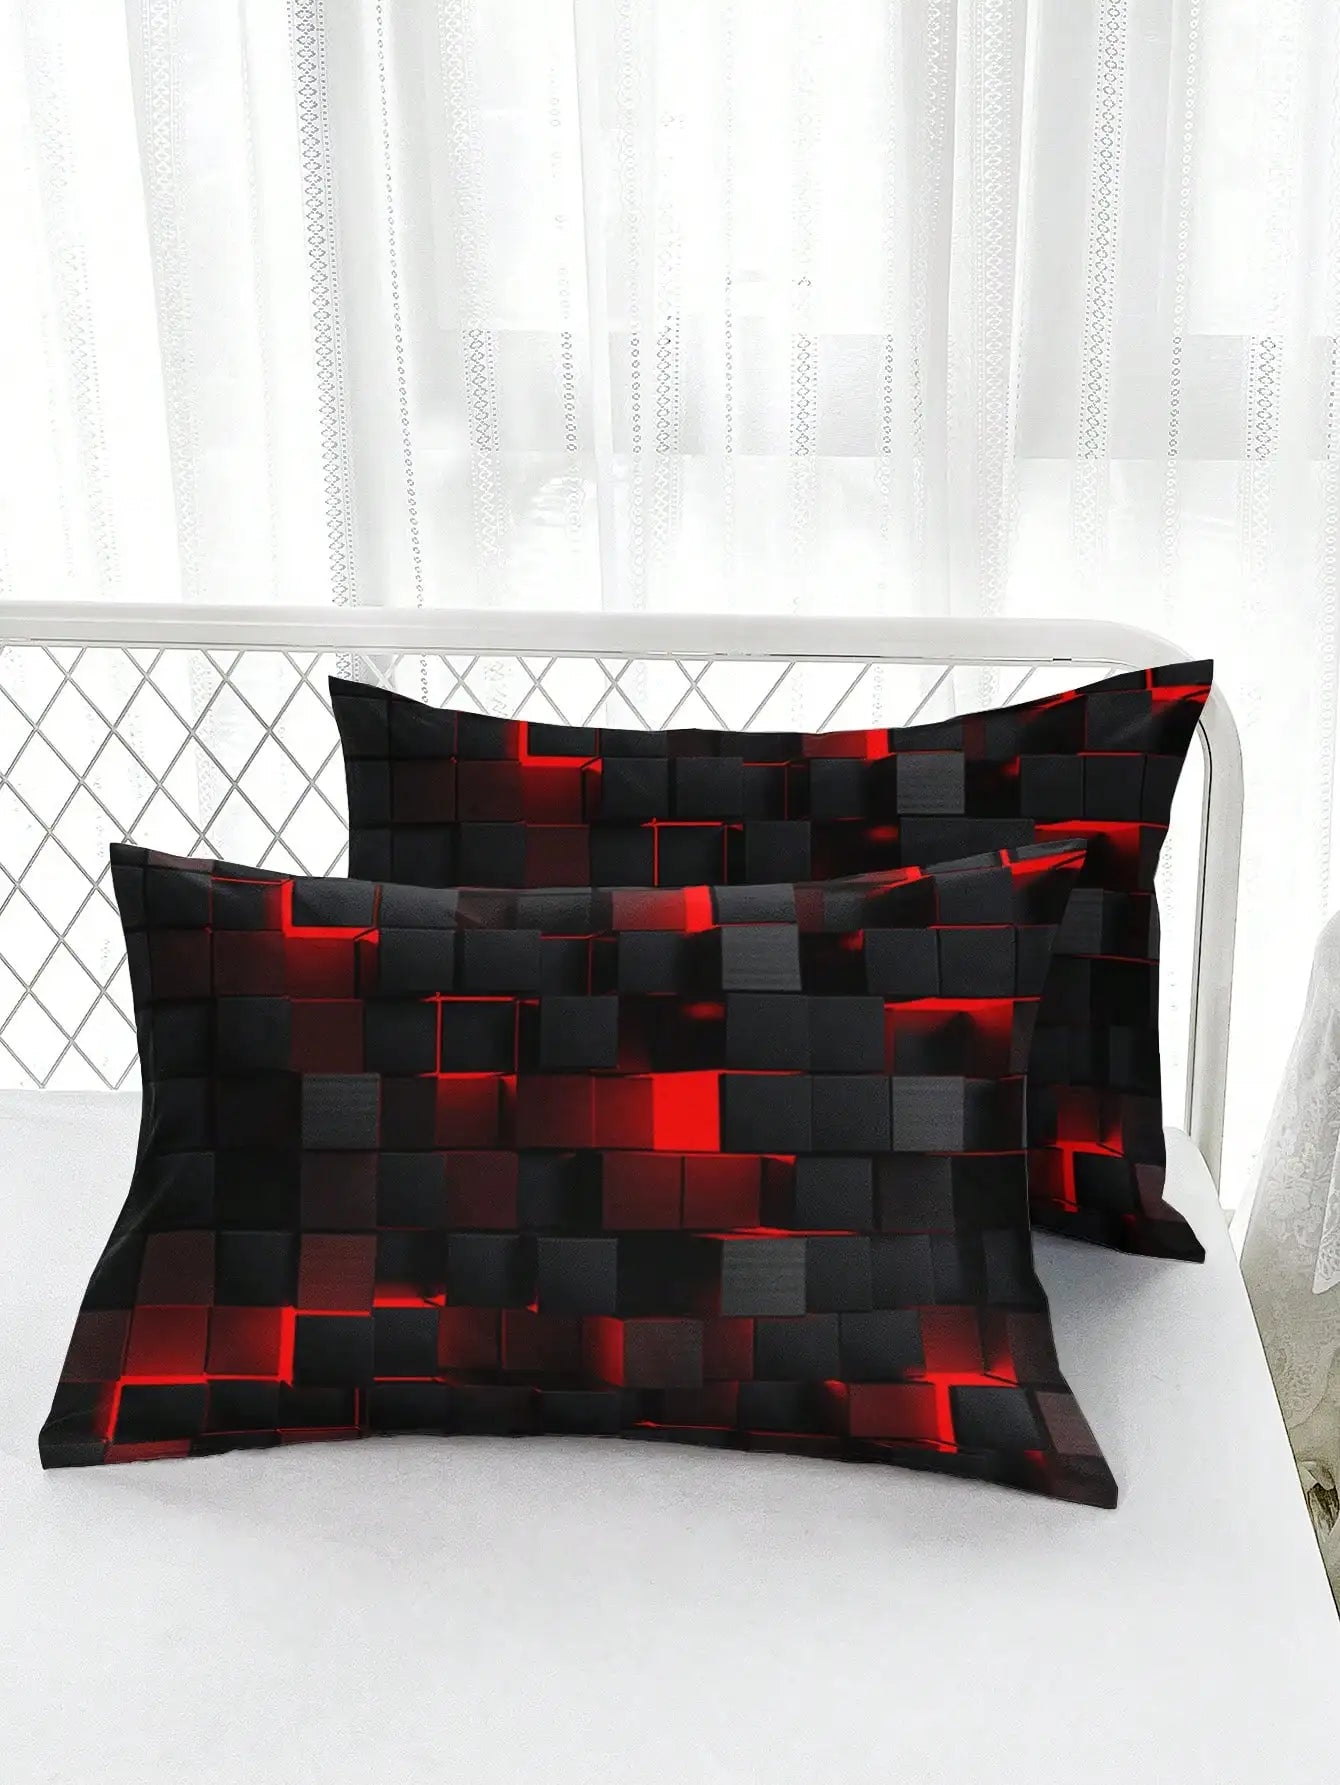 Teknologi stil rød gitter dyne cover sæt inklusive 1 dyne cover og 2 pillowcases egnede til hjemmet og sovesal brug